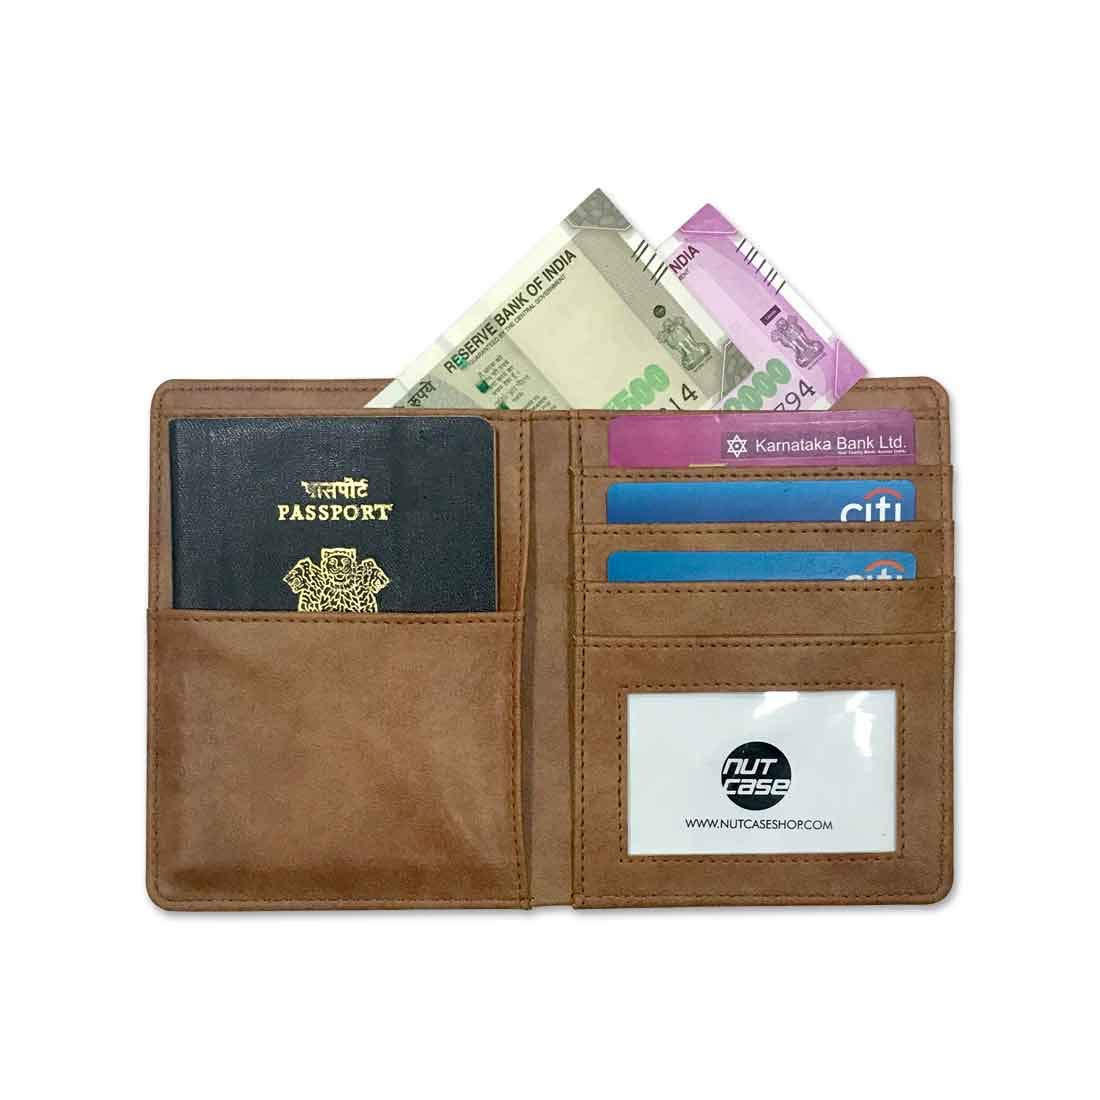 101701 Leather Passport Bag (RED) – Sreeleathers Ltd